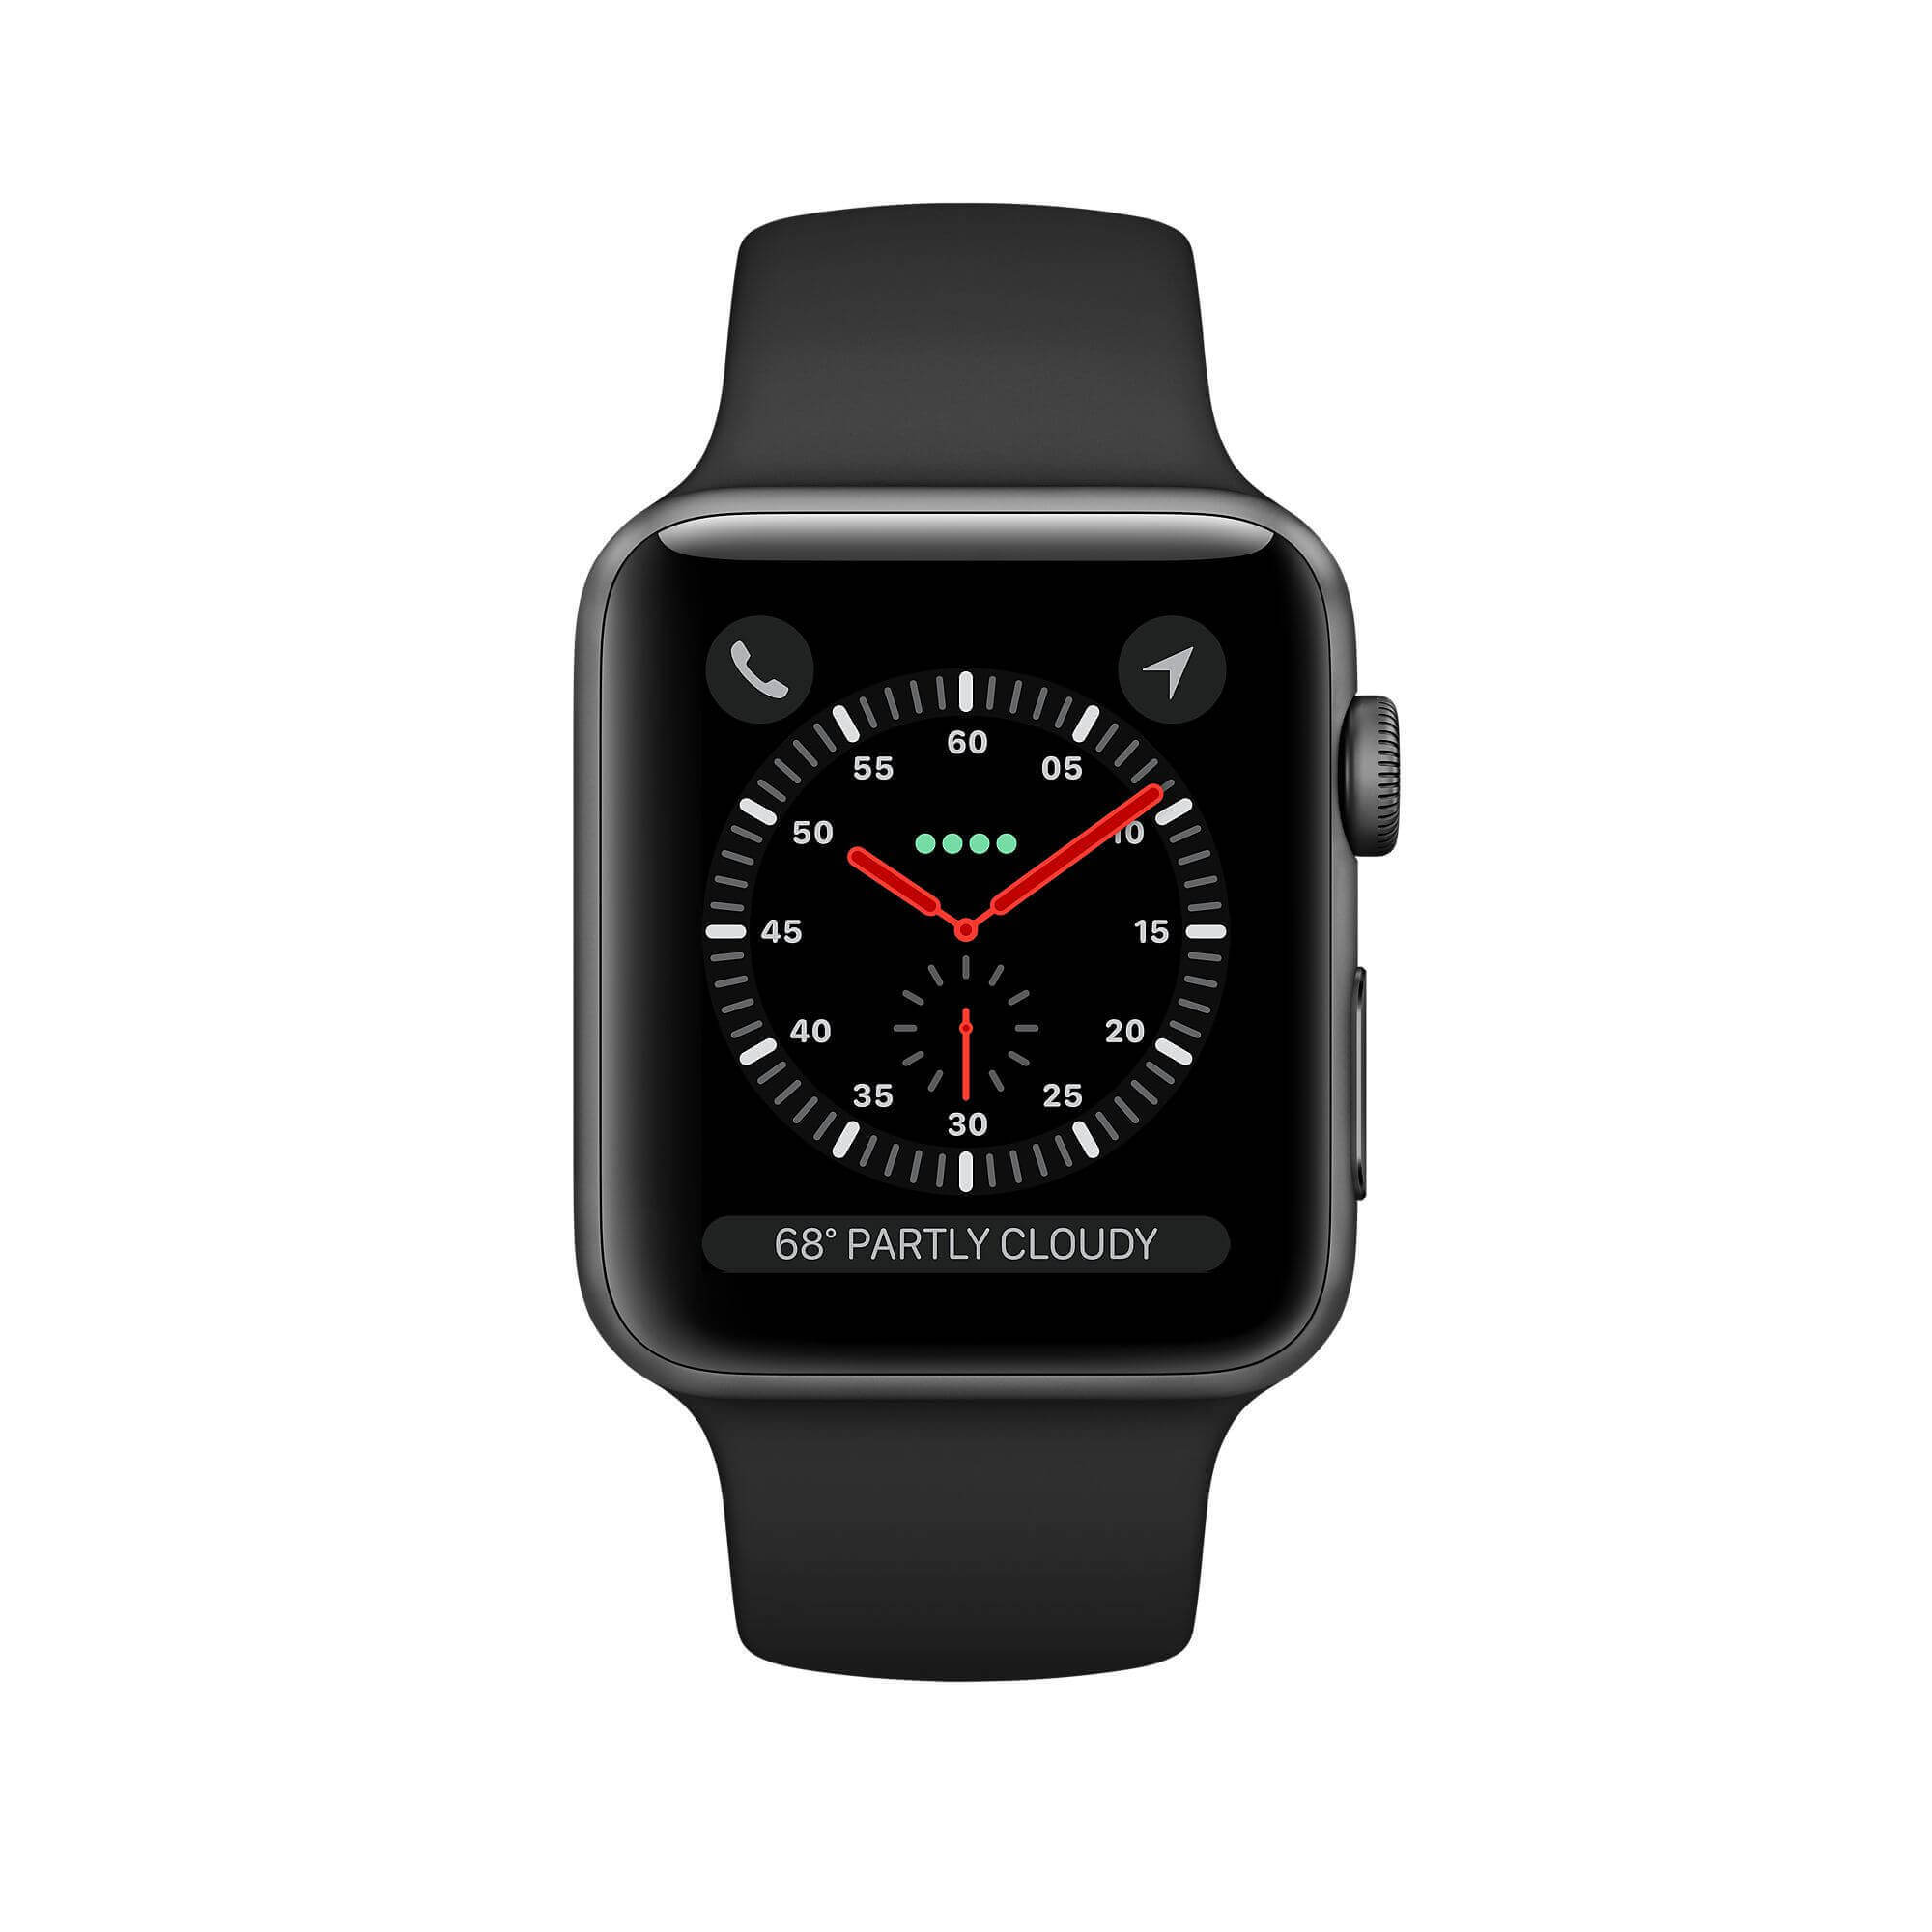 Apple Watch Space Gray Aluminum Black Sport Band Series 3 in Nigeria.